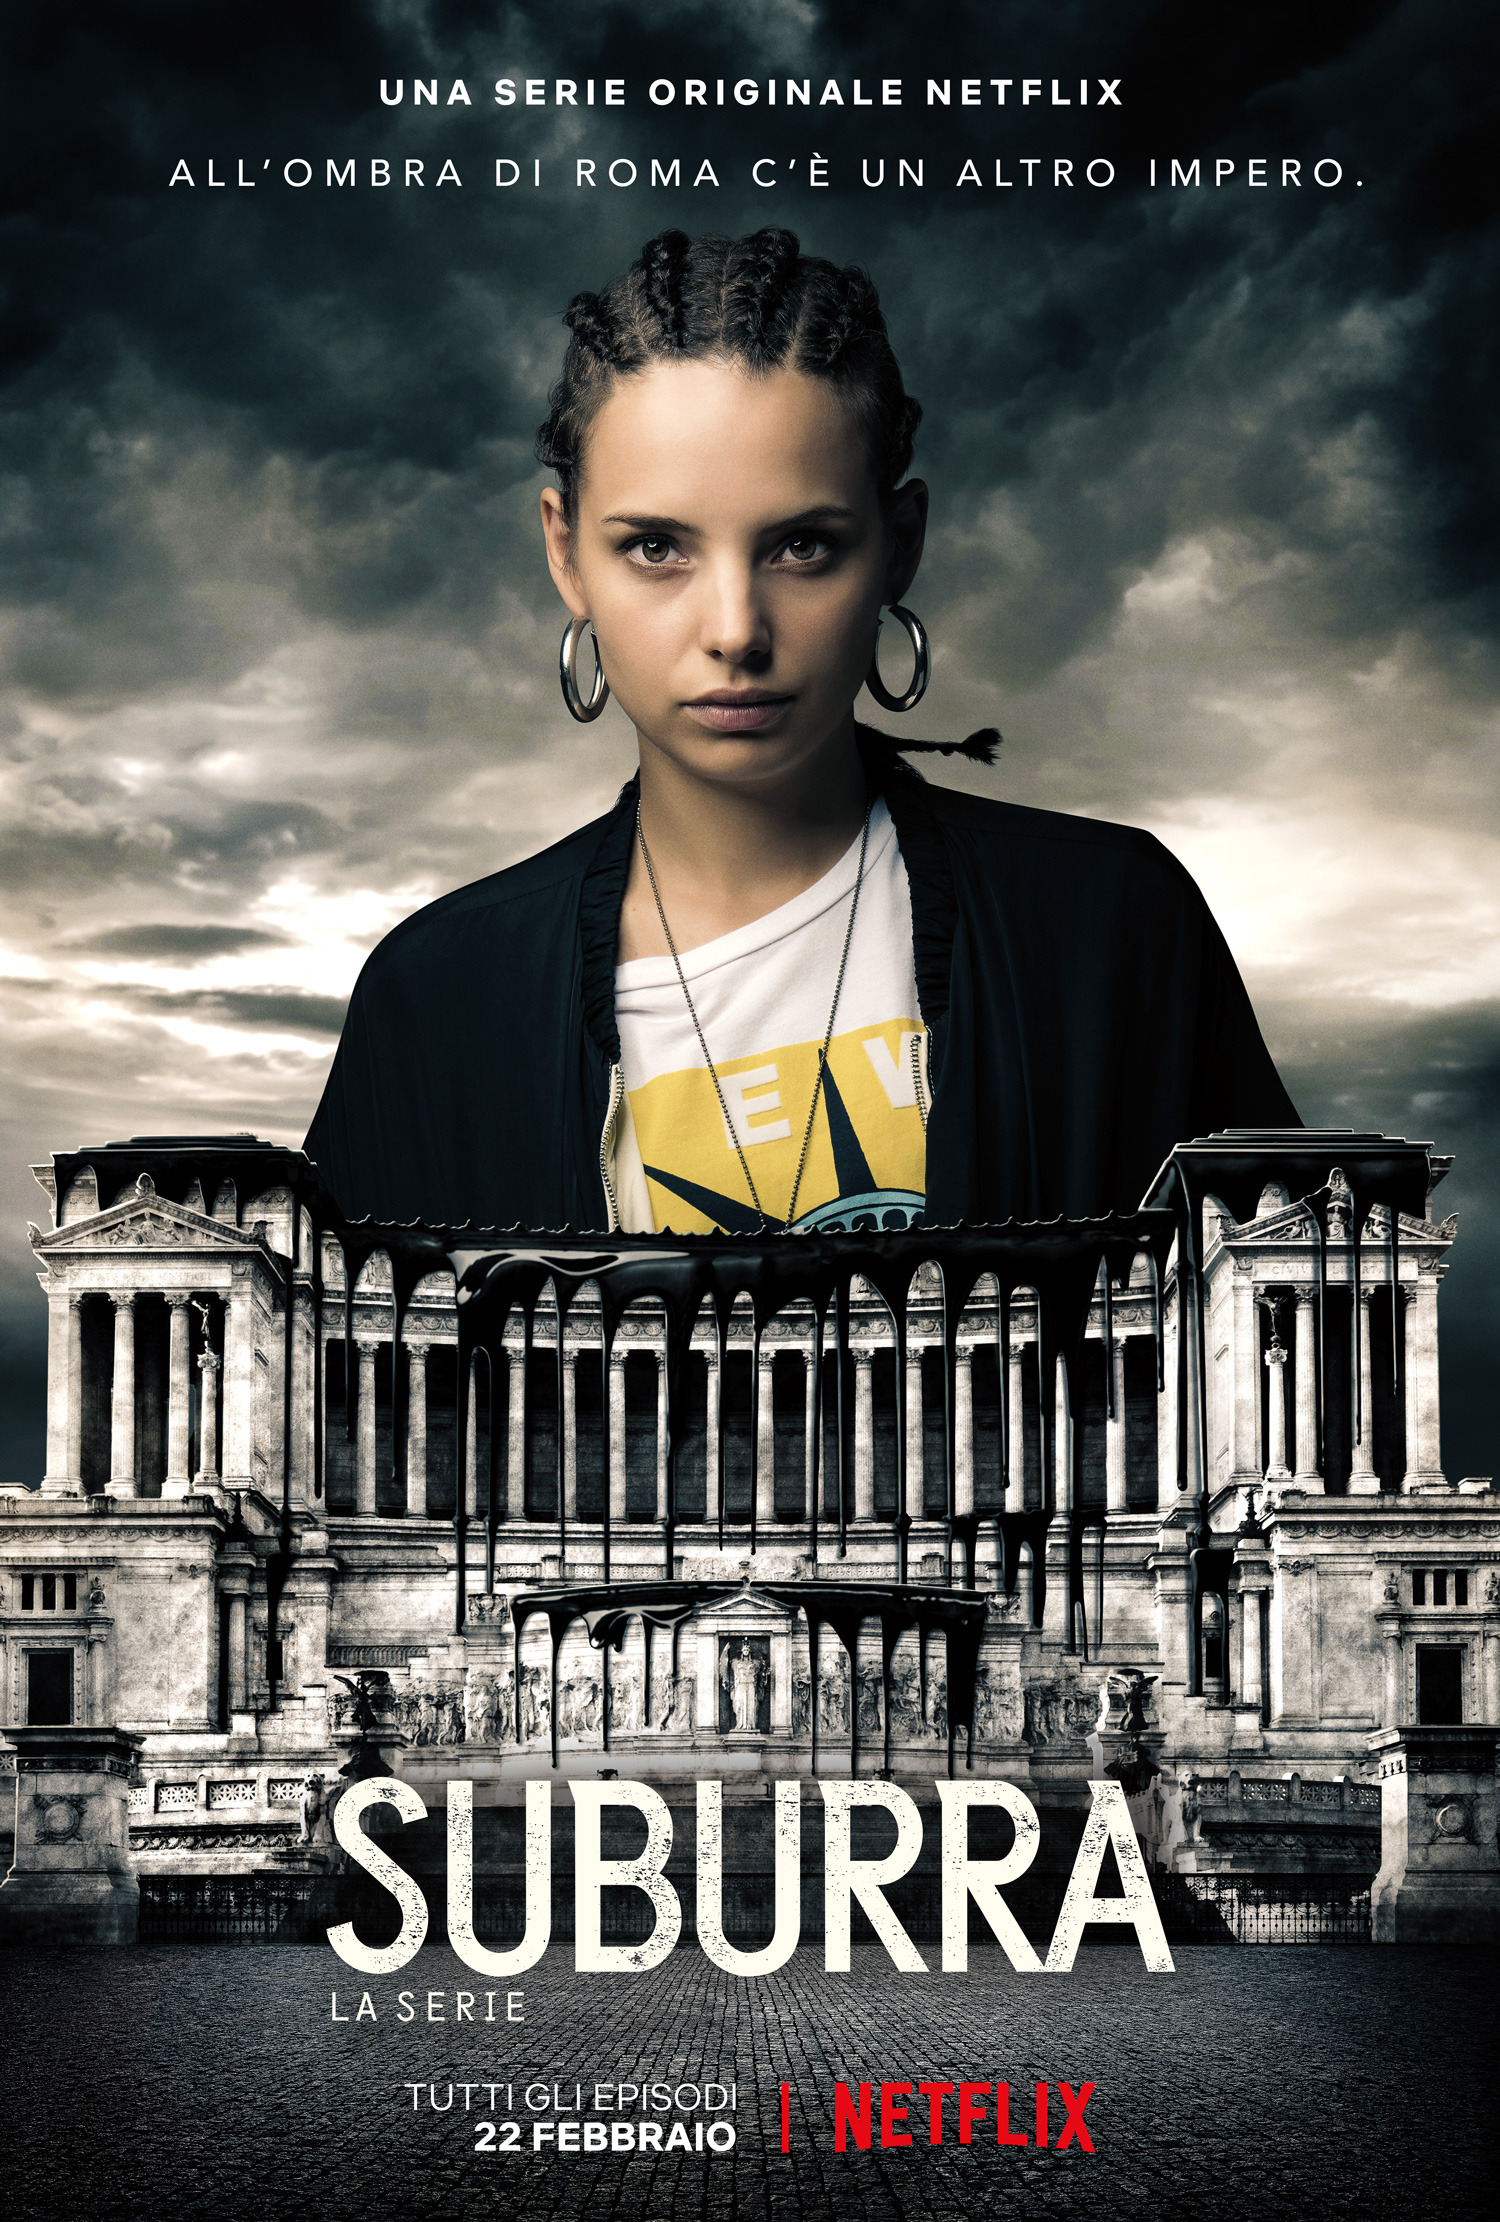 Mega Sized TV Poster Image for Suburra: la serie (#10 of 12)